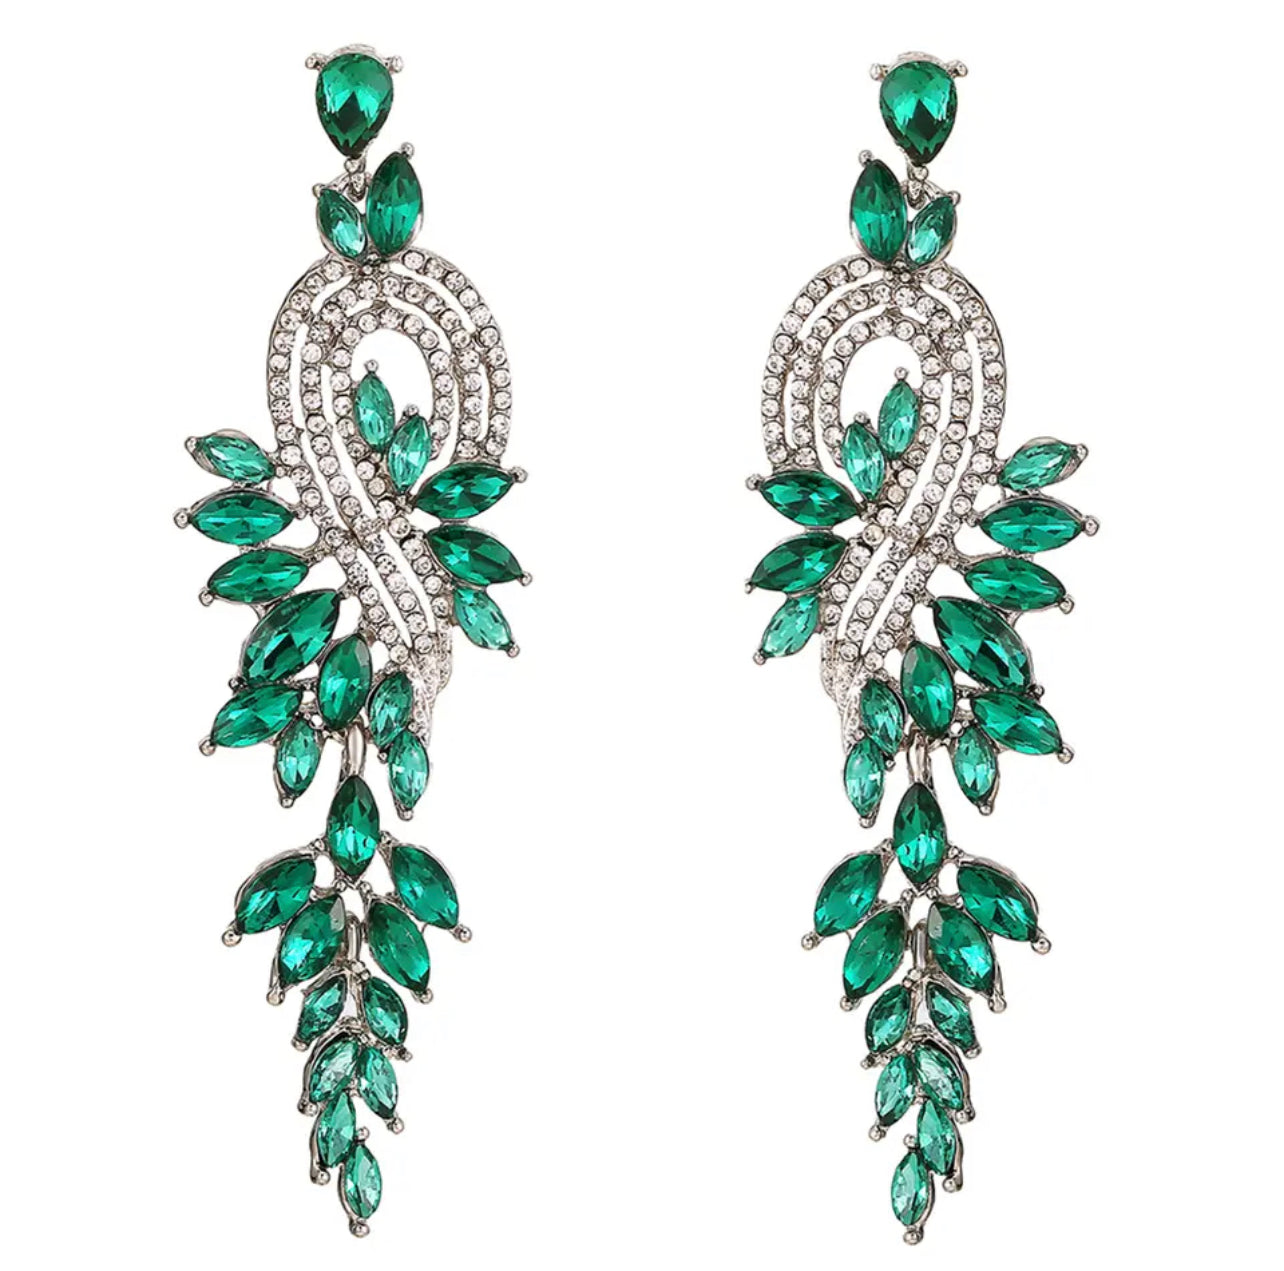 Hollywood Crystal Earrings (Green)